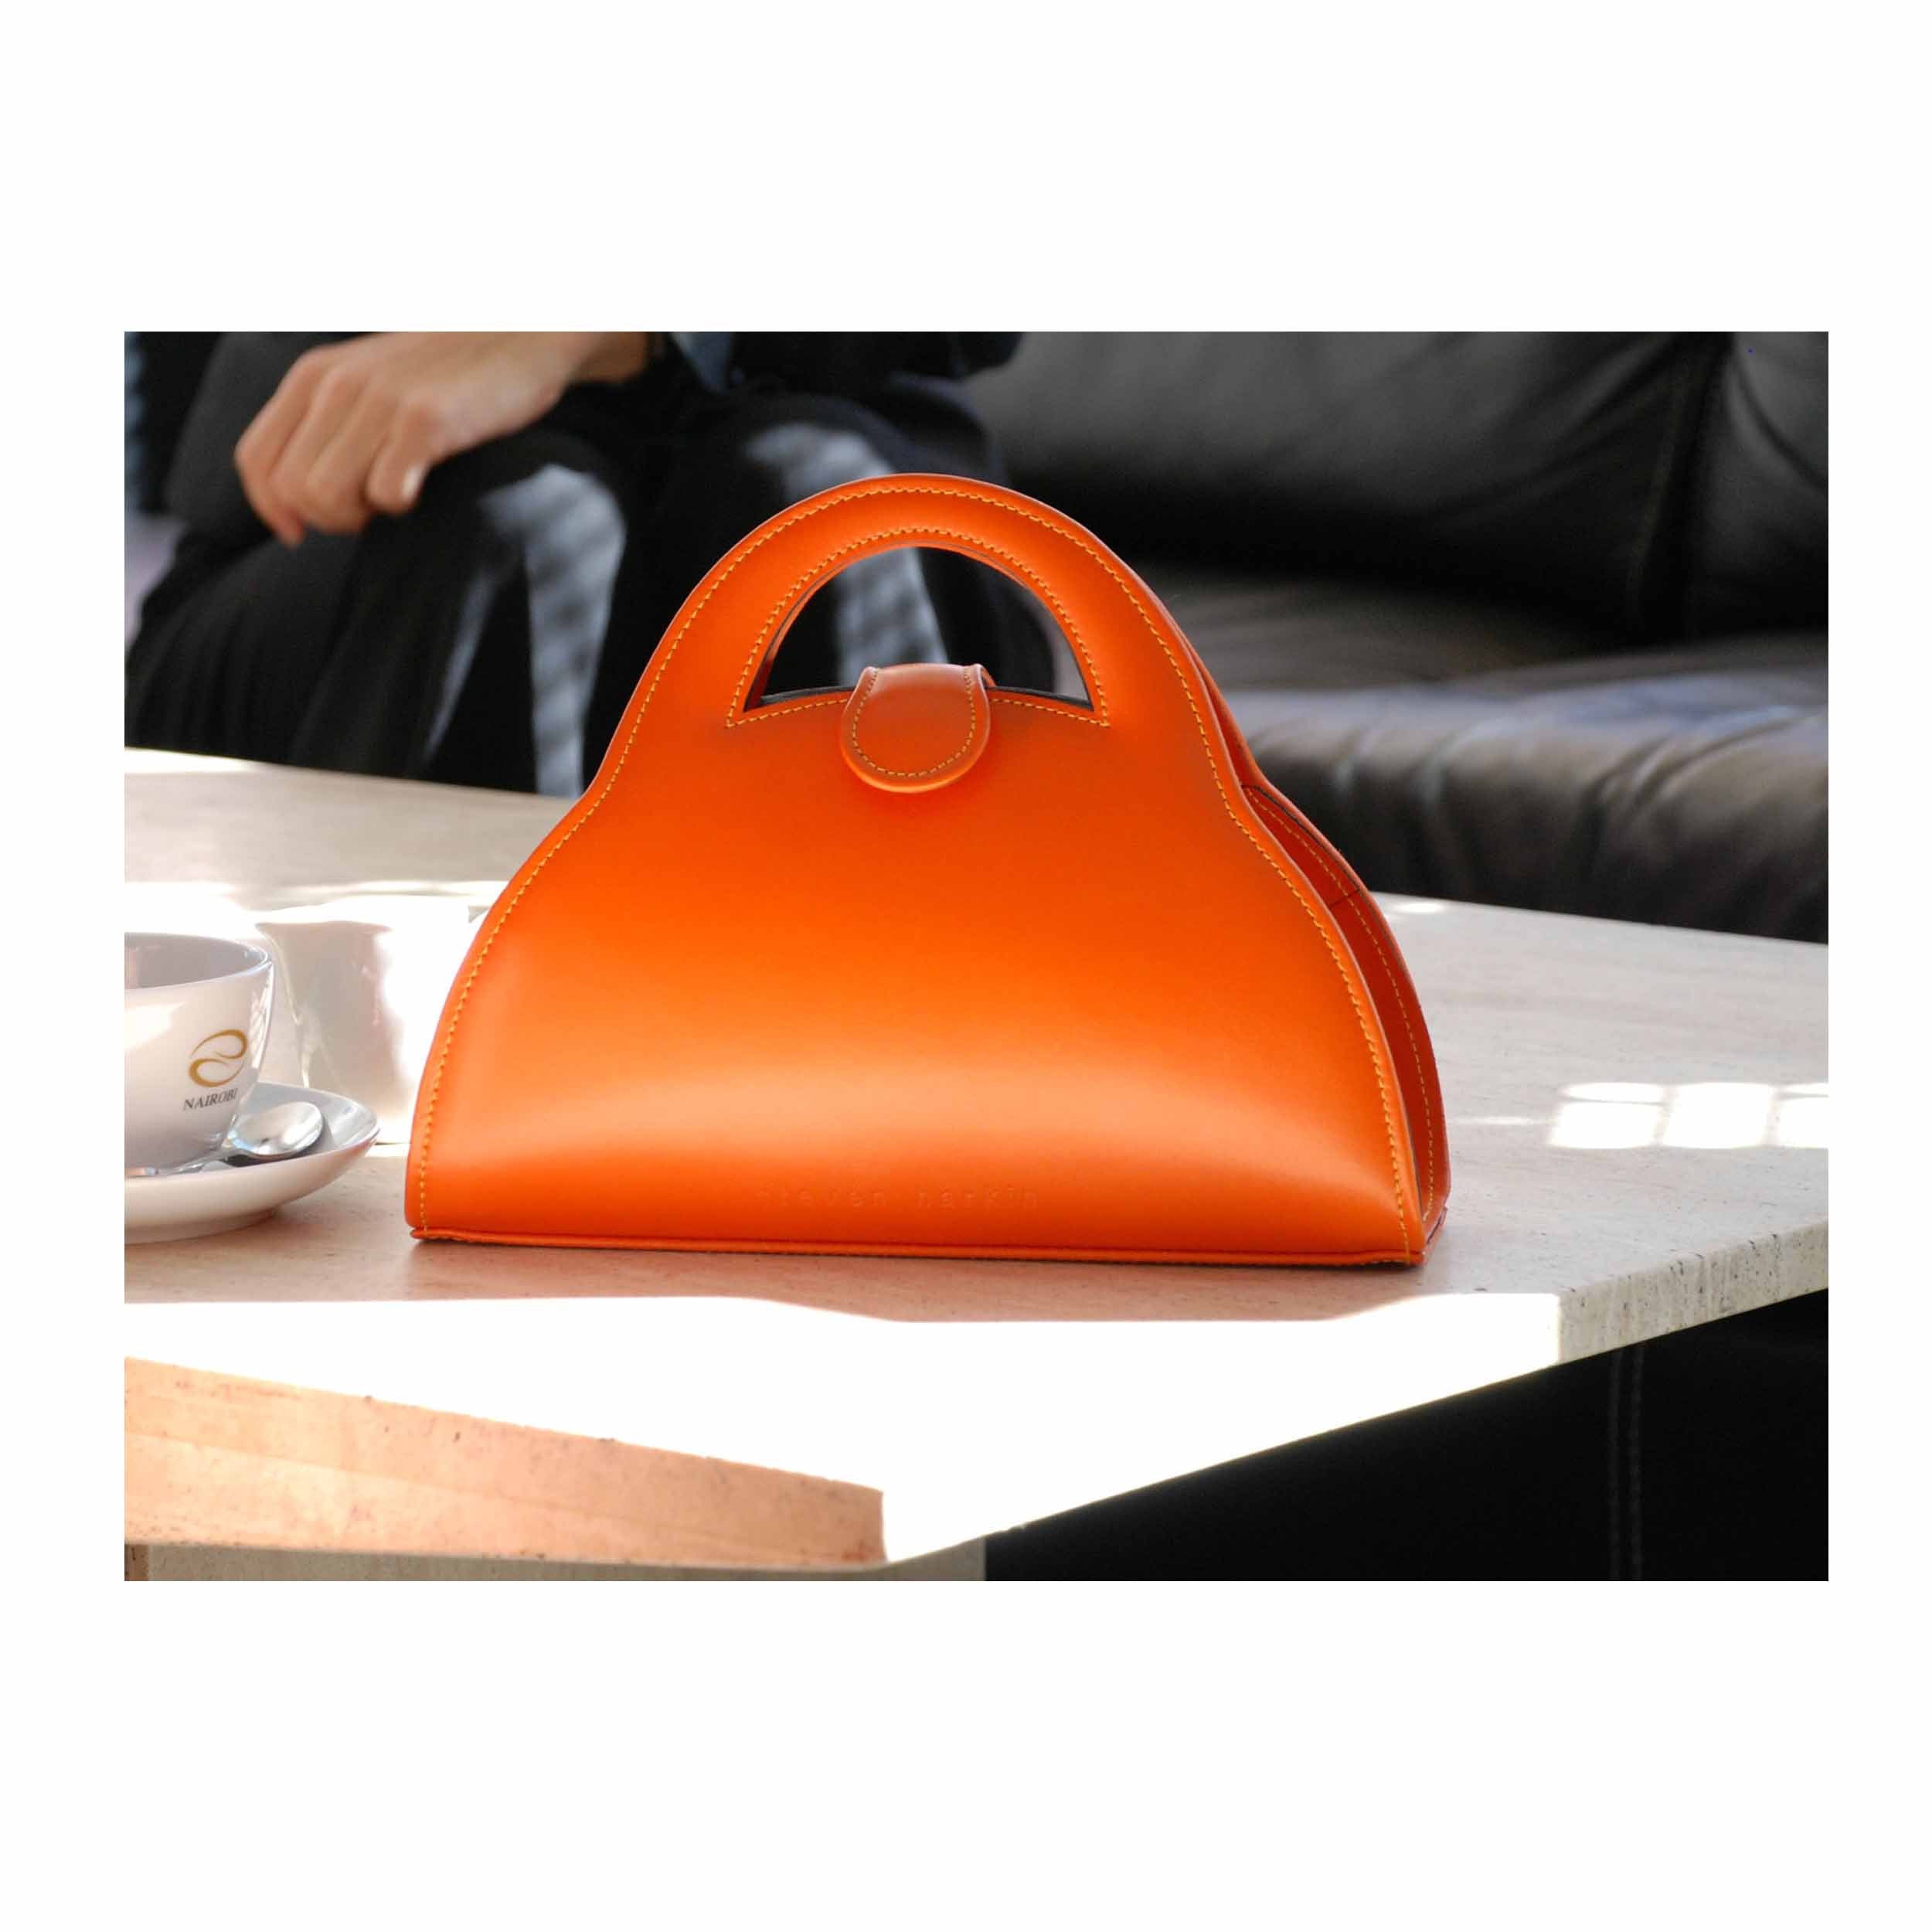 The Babs - Orange bag